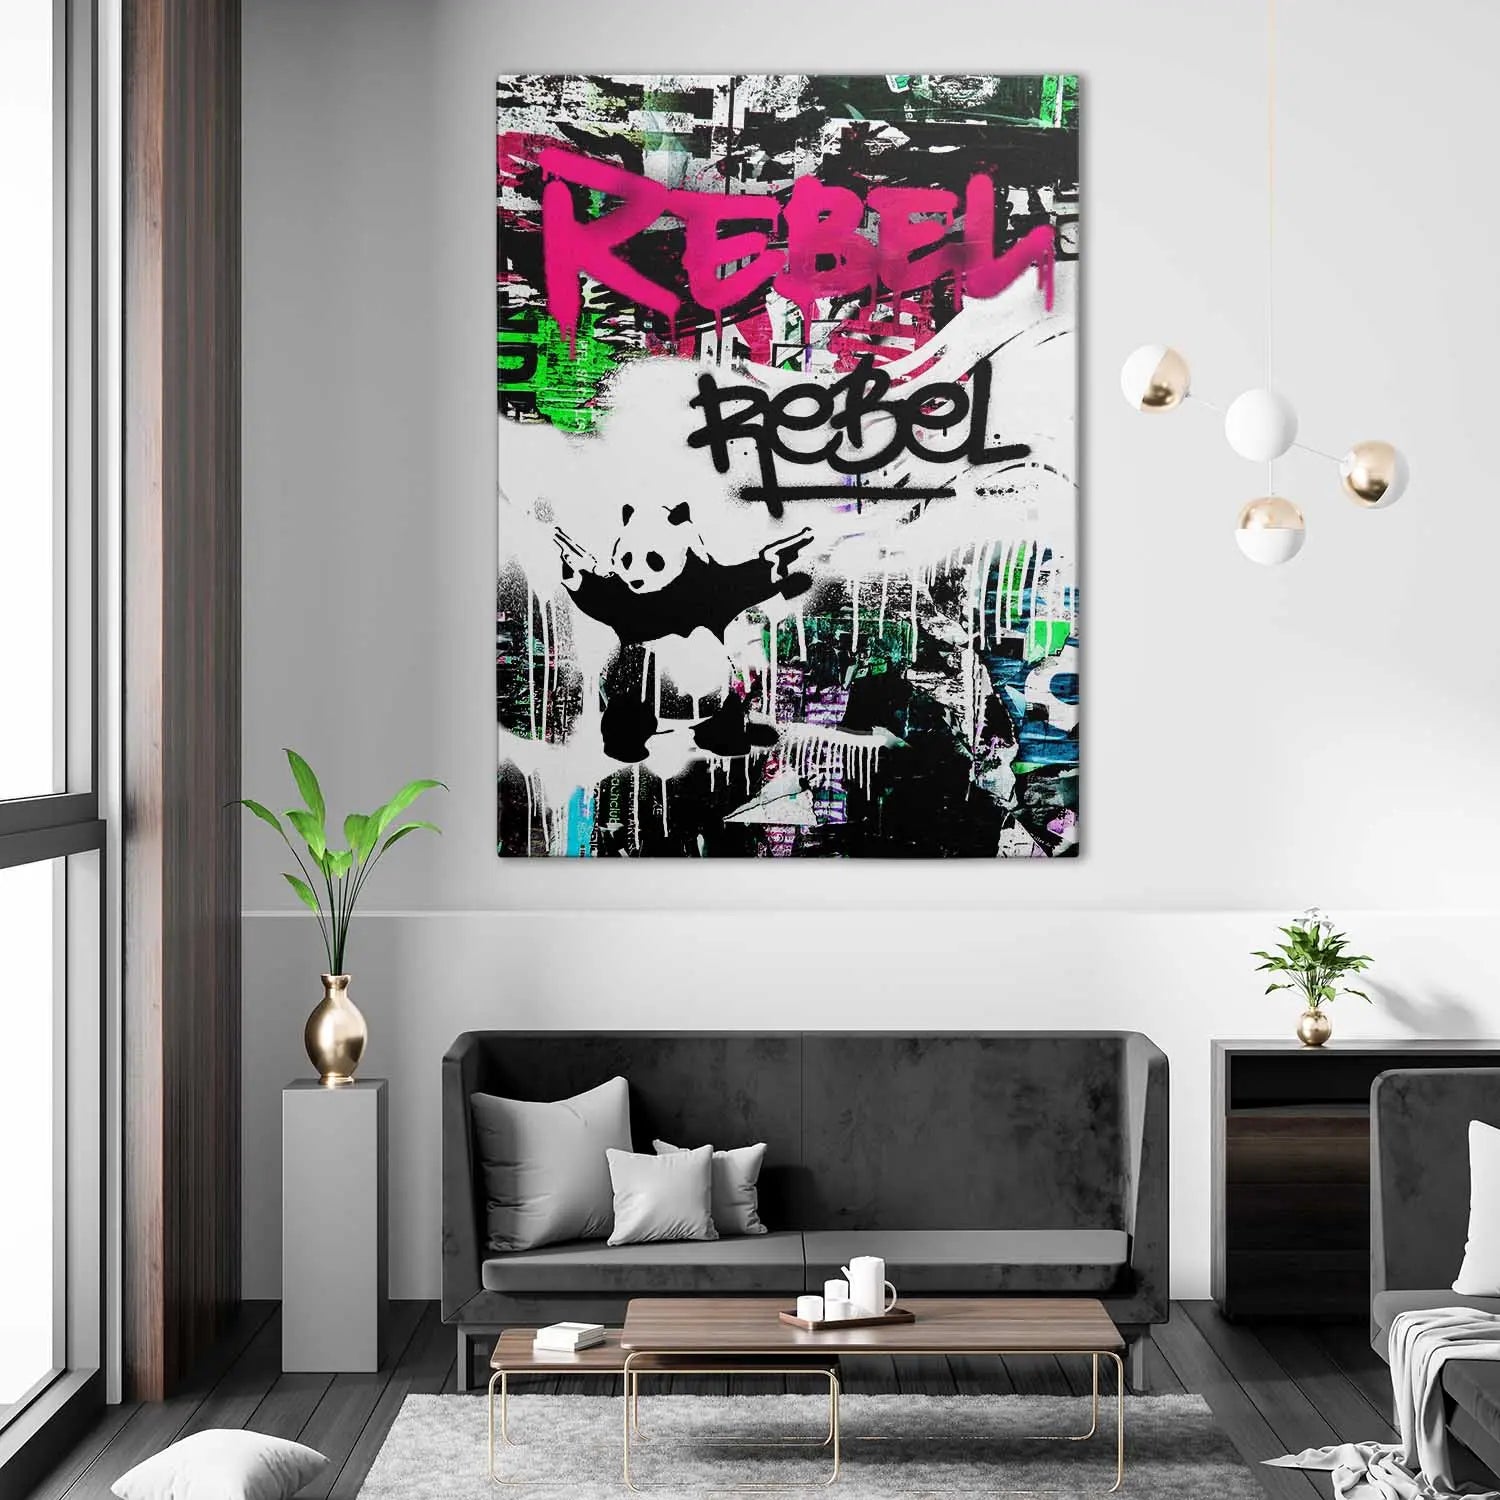 "REBELL" - Art For Everyone